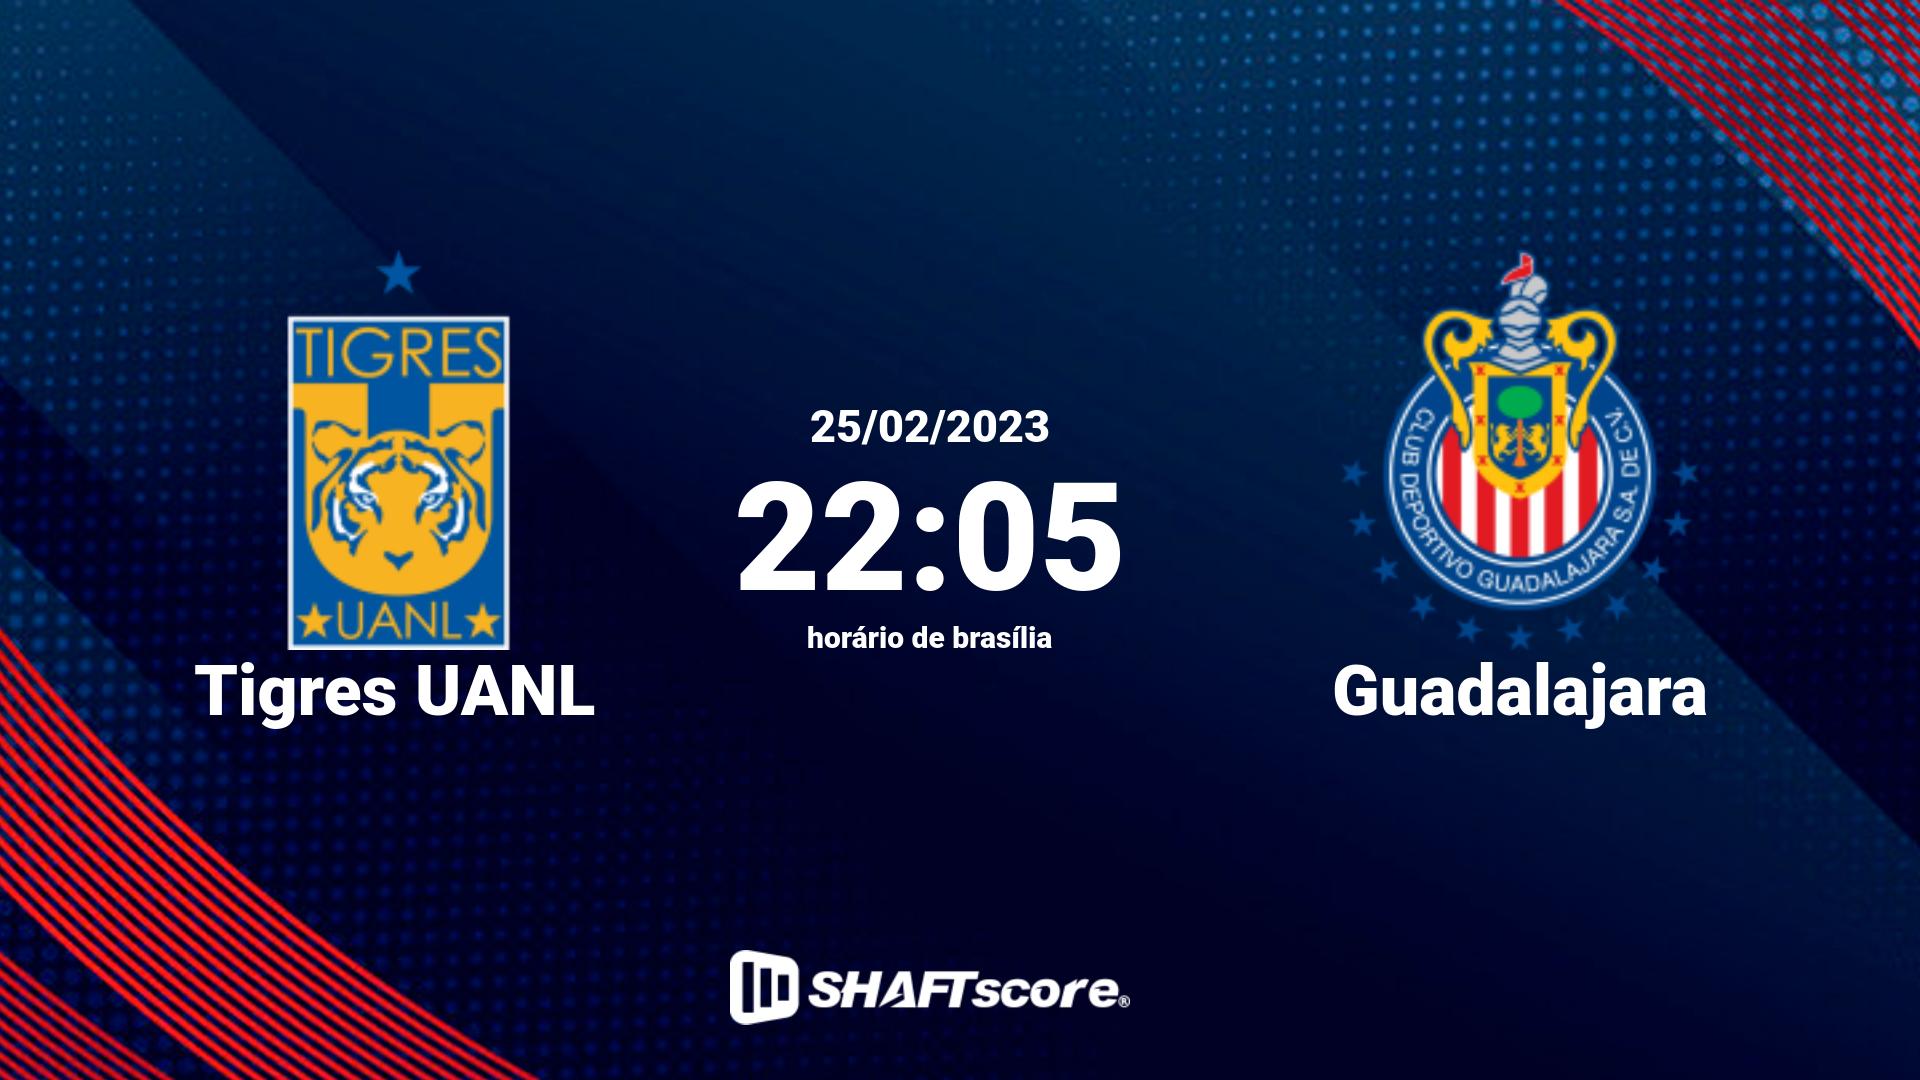 Estatísticas do jogo Tigres UANL vs Guadalajara 25.02 22:05